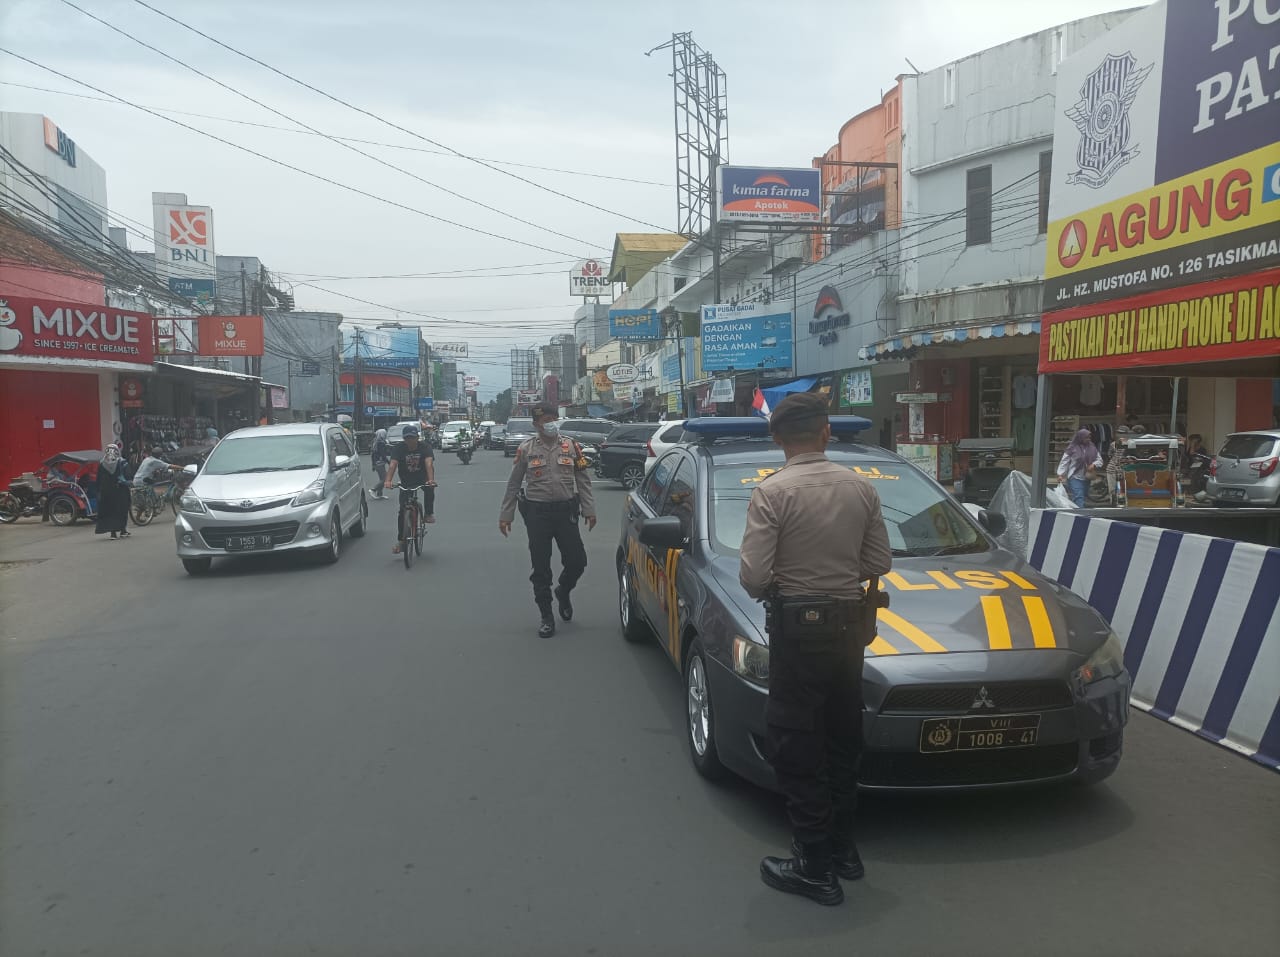 Antisipasi Gangguan Keamanan Selama Ramadhan, Polisi di Kota Tasikmalaya Gencarkan Patroli Ngabuburit